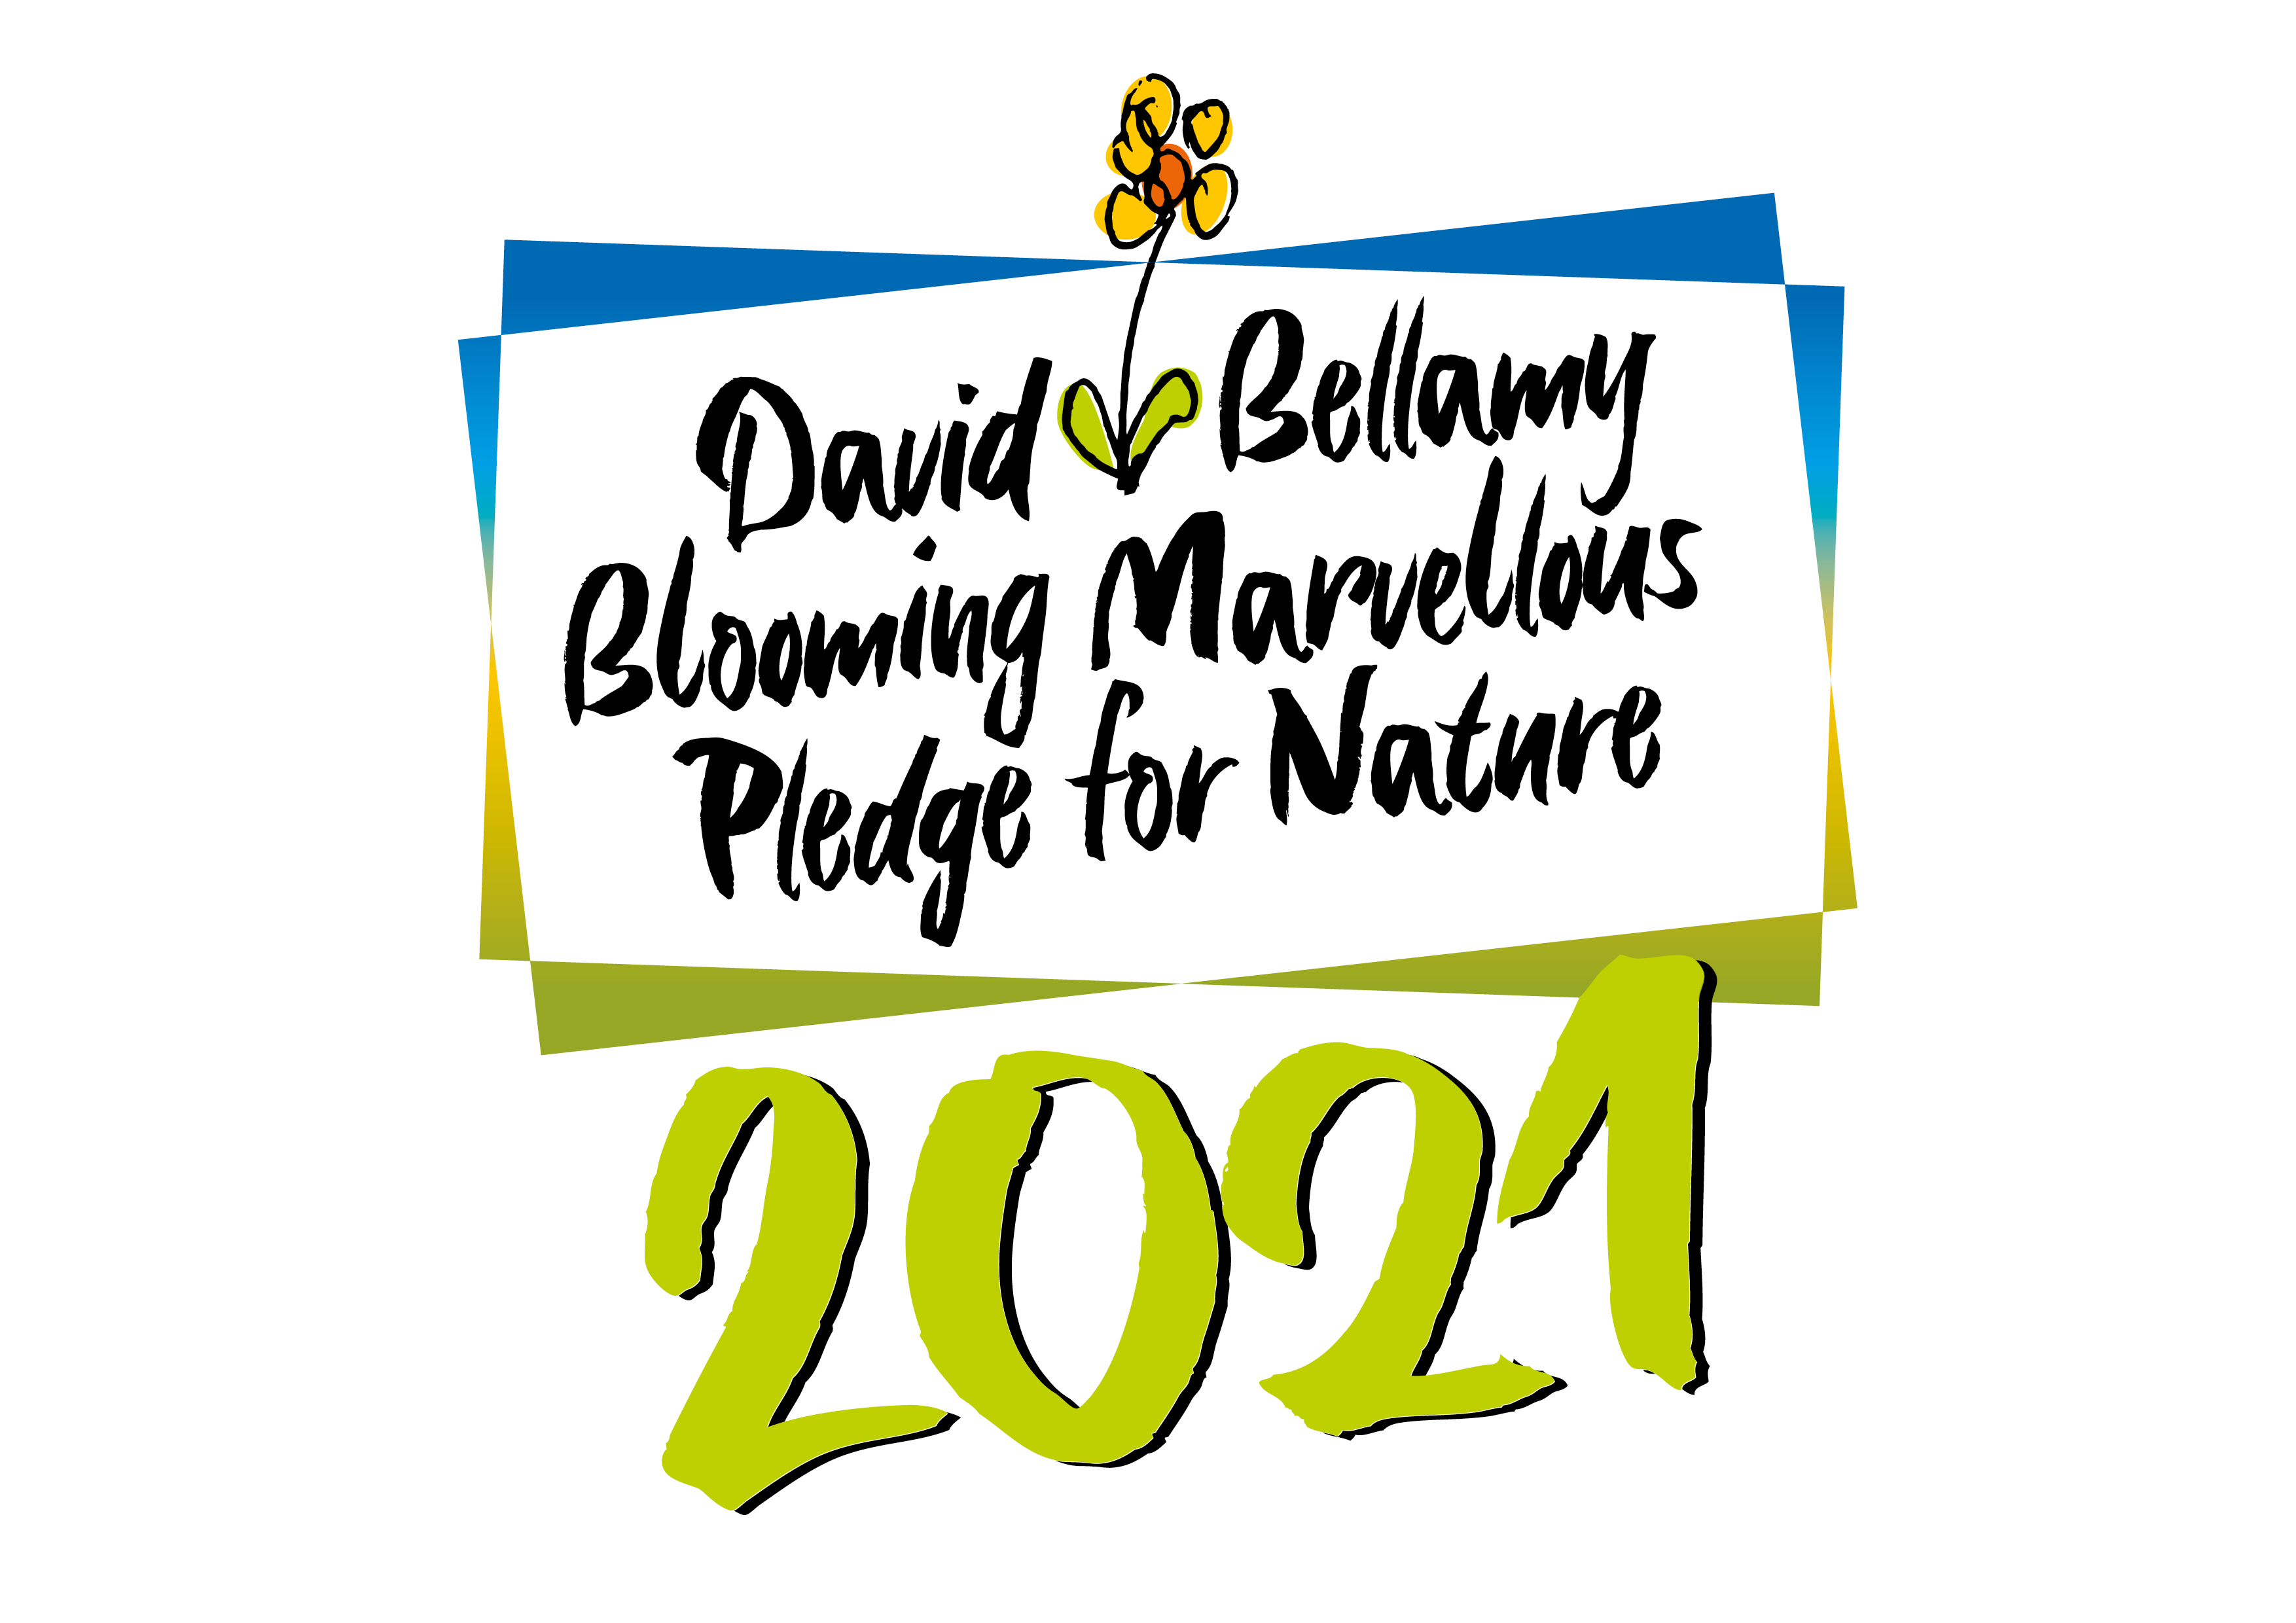 David Bellamy pledge for nature 2021